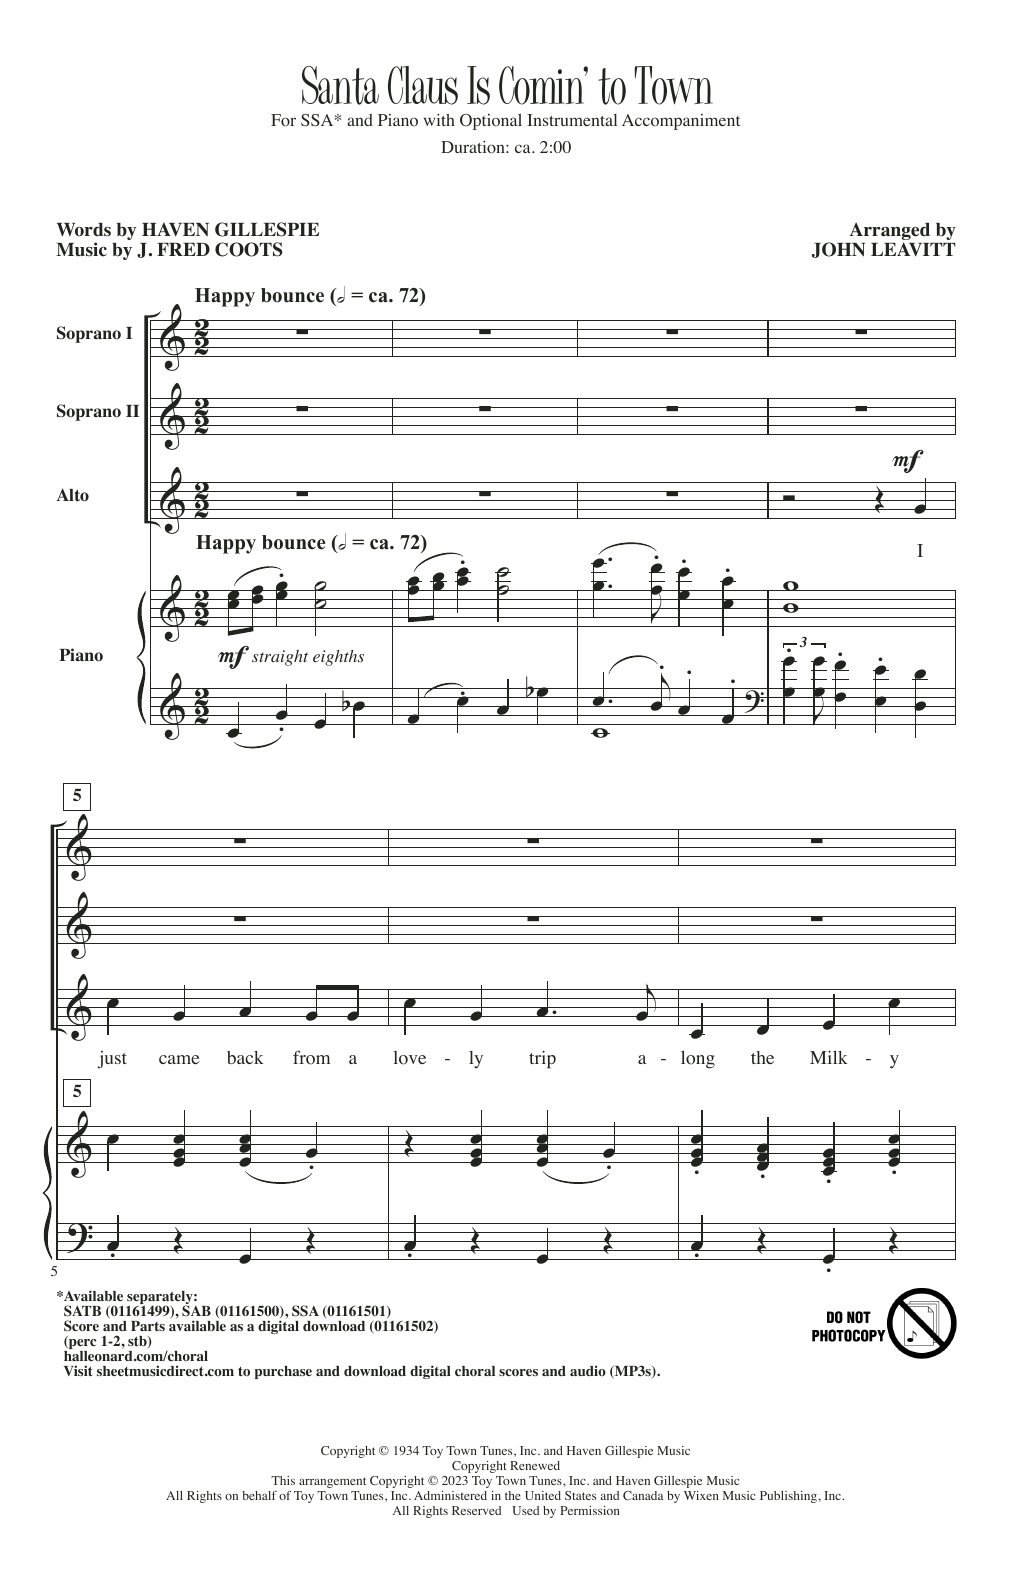 J. Fred Coots Santa Claus Is Comin' To Town (arr. John Leavitt) Sheet Music Notes & Chords for SAB Choir - Download or Print PDF